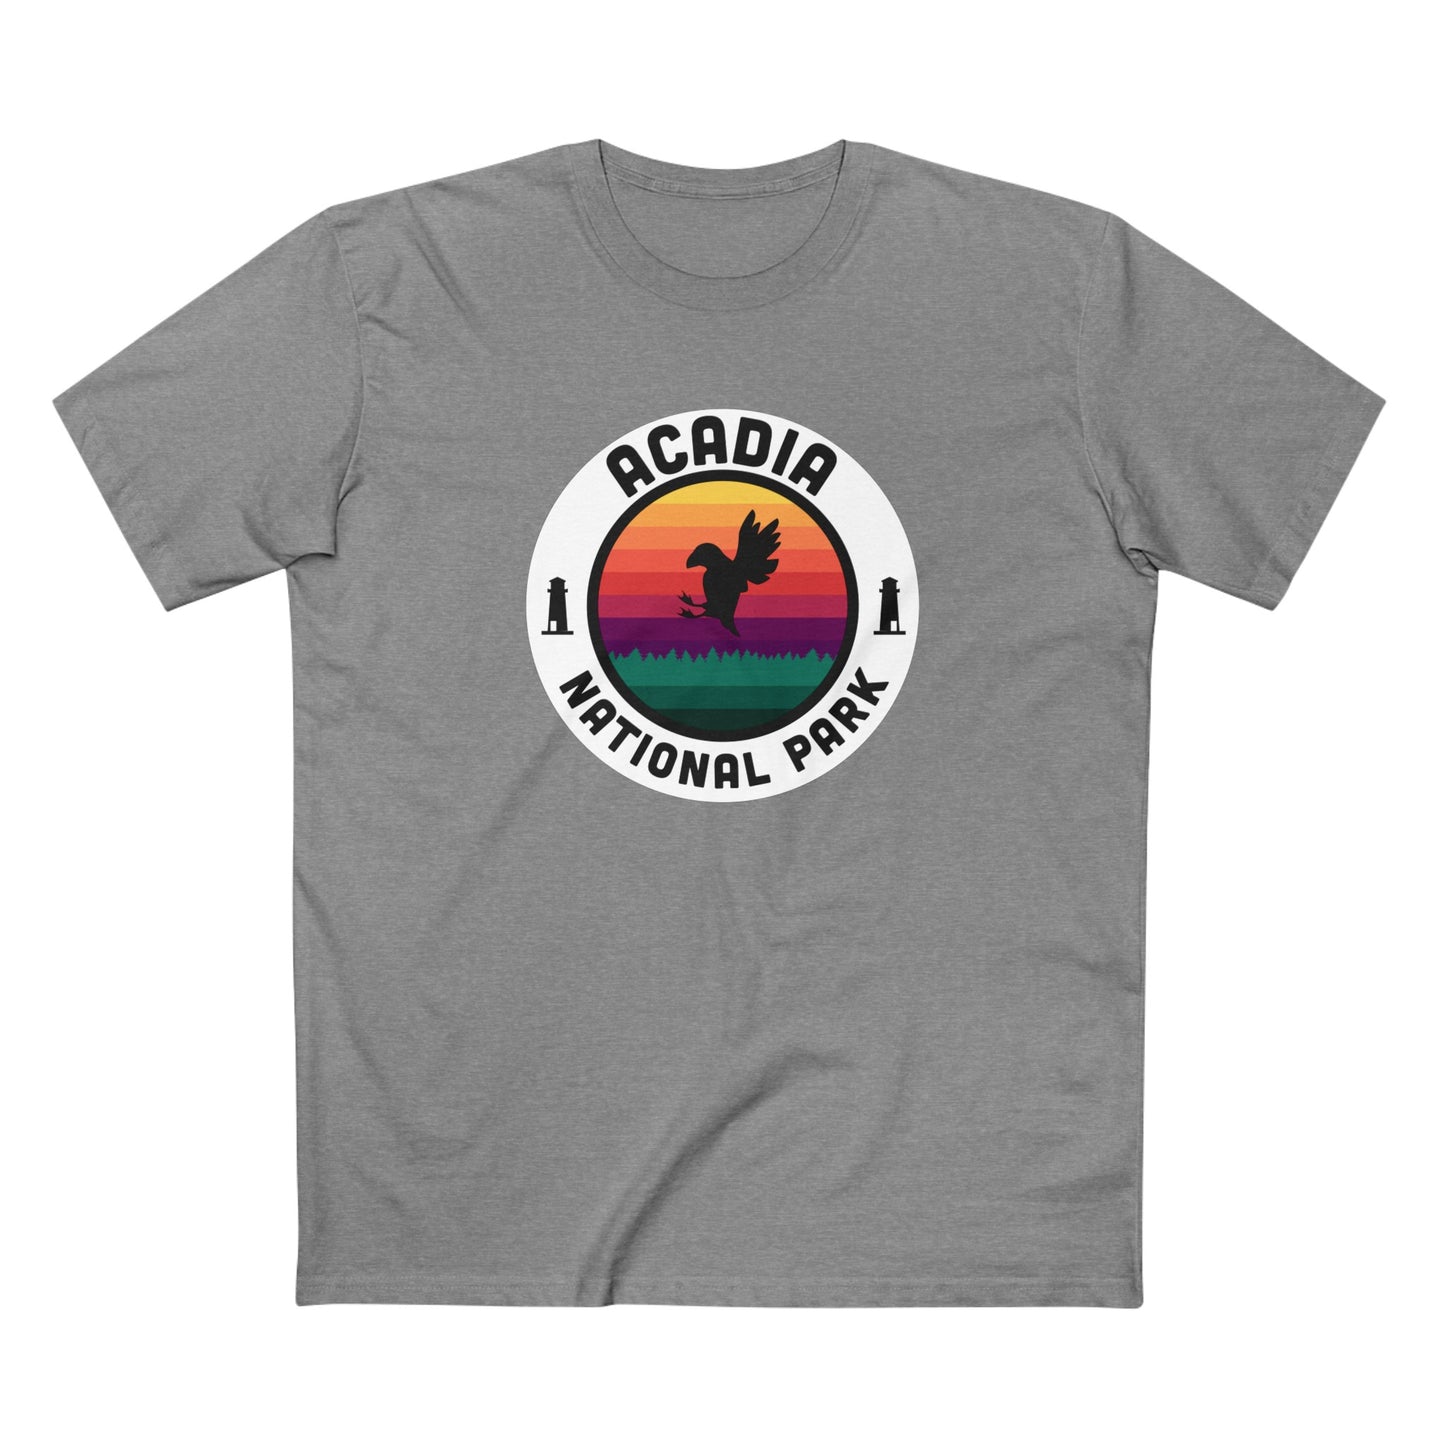 Acadia National Park T-Shirt - Round Badge Design